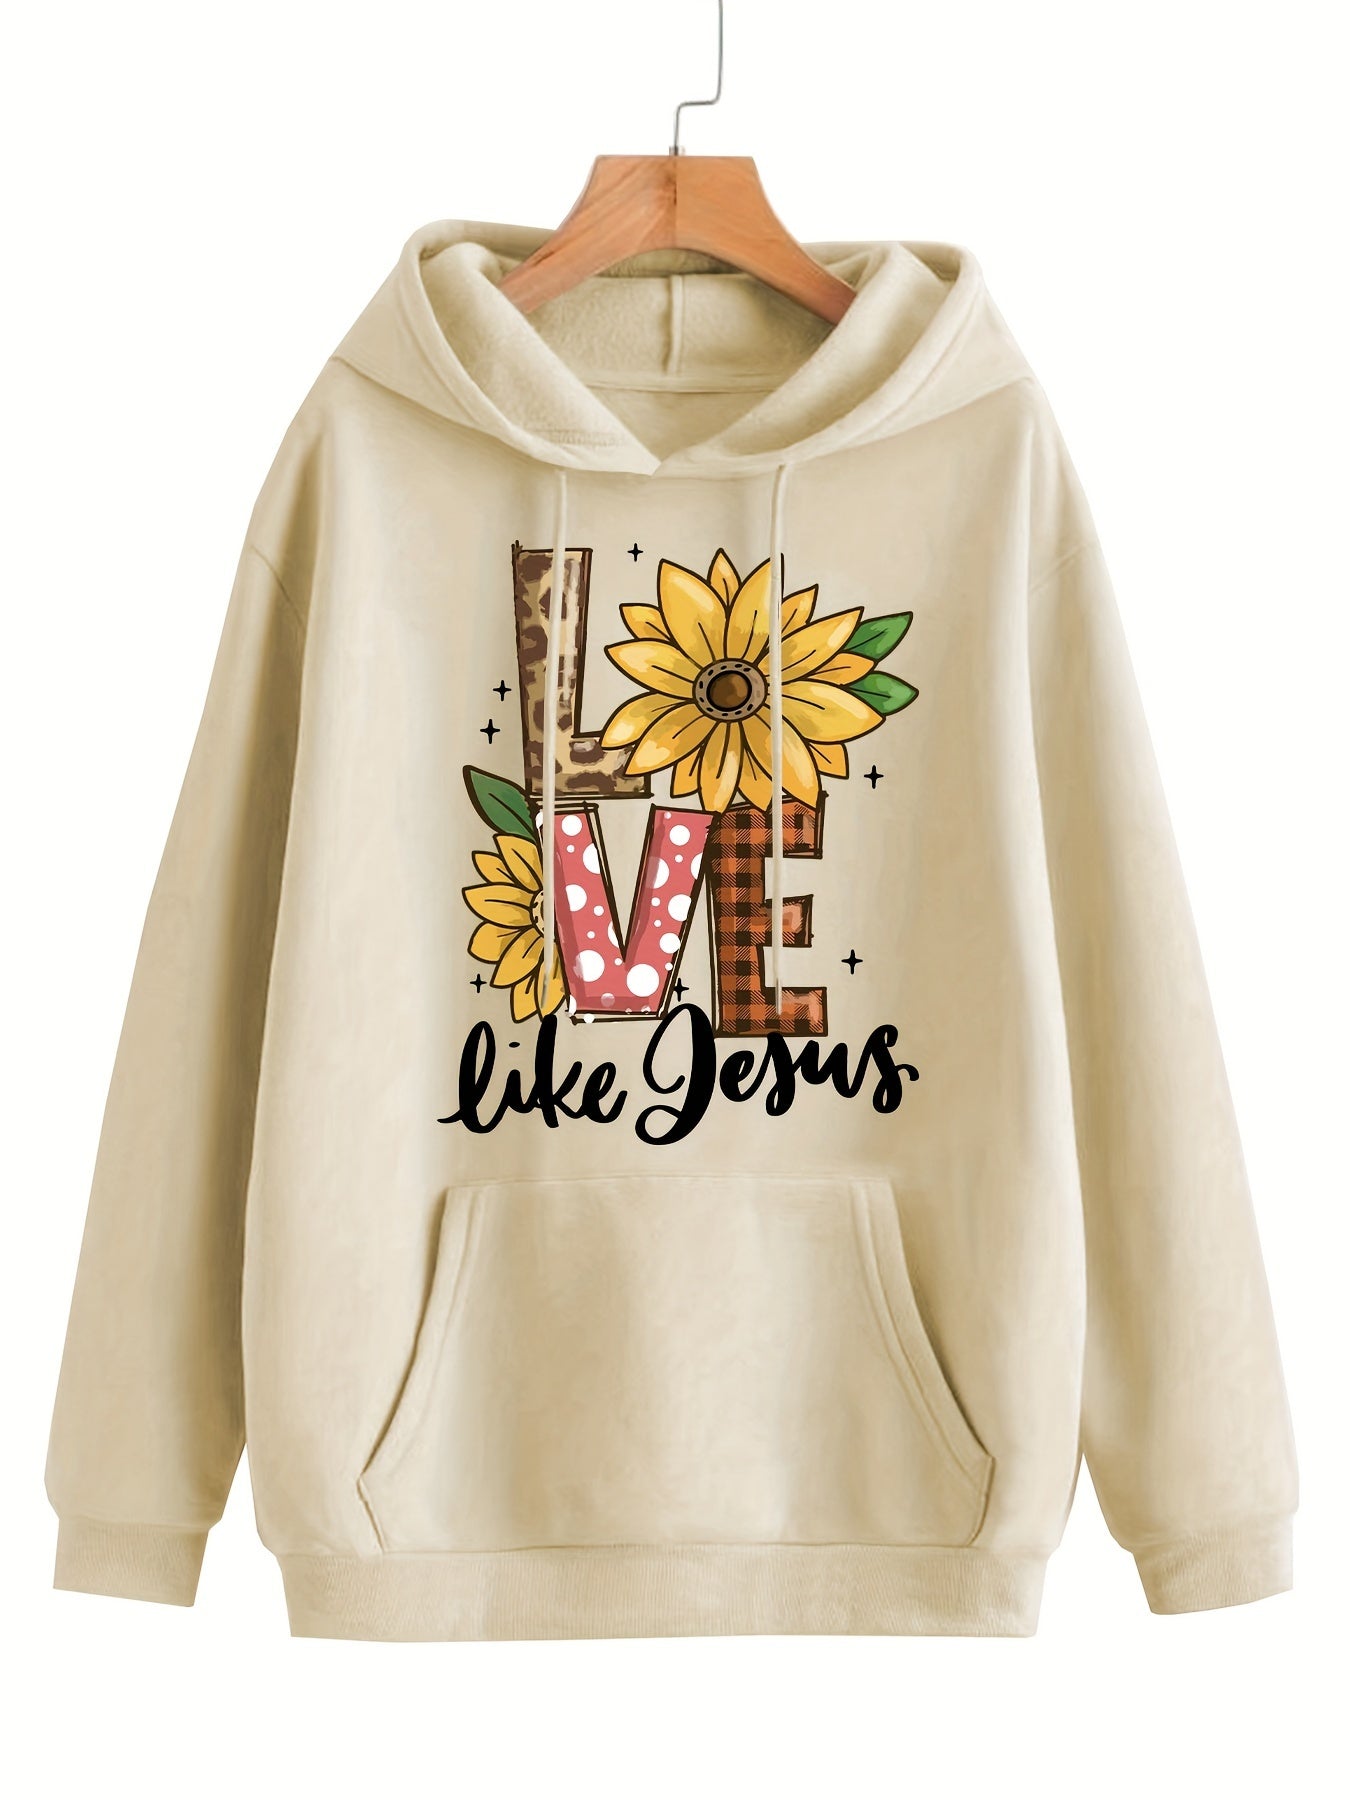 Love Like Jesus Women's Christian Pullover Hooded Sweatshirt claimedbygoddesigns